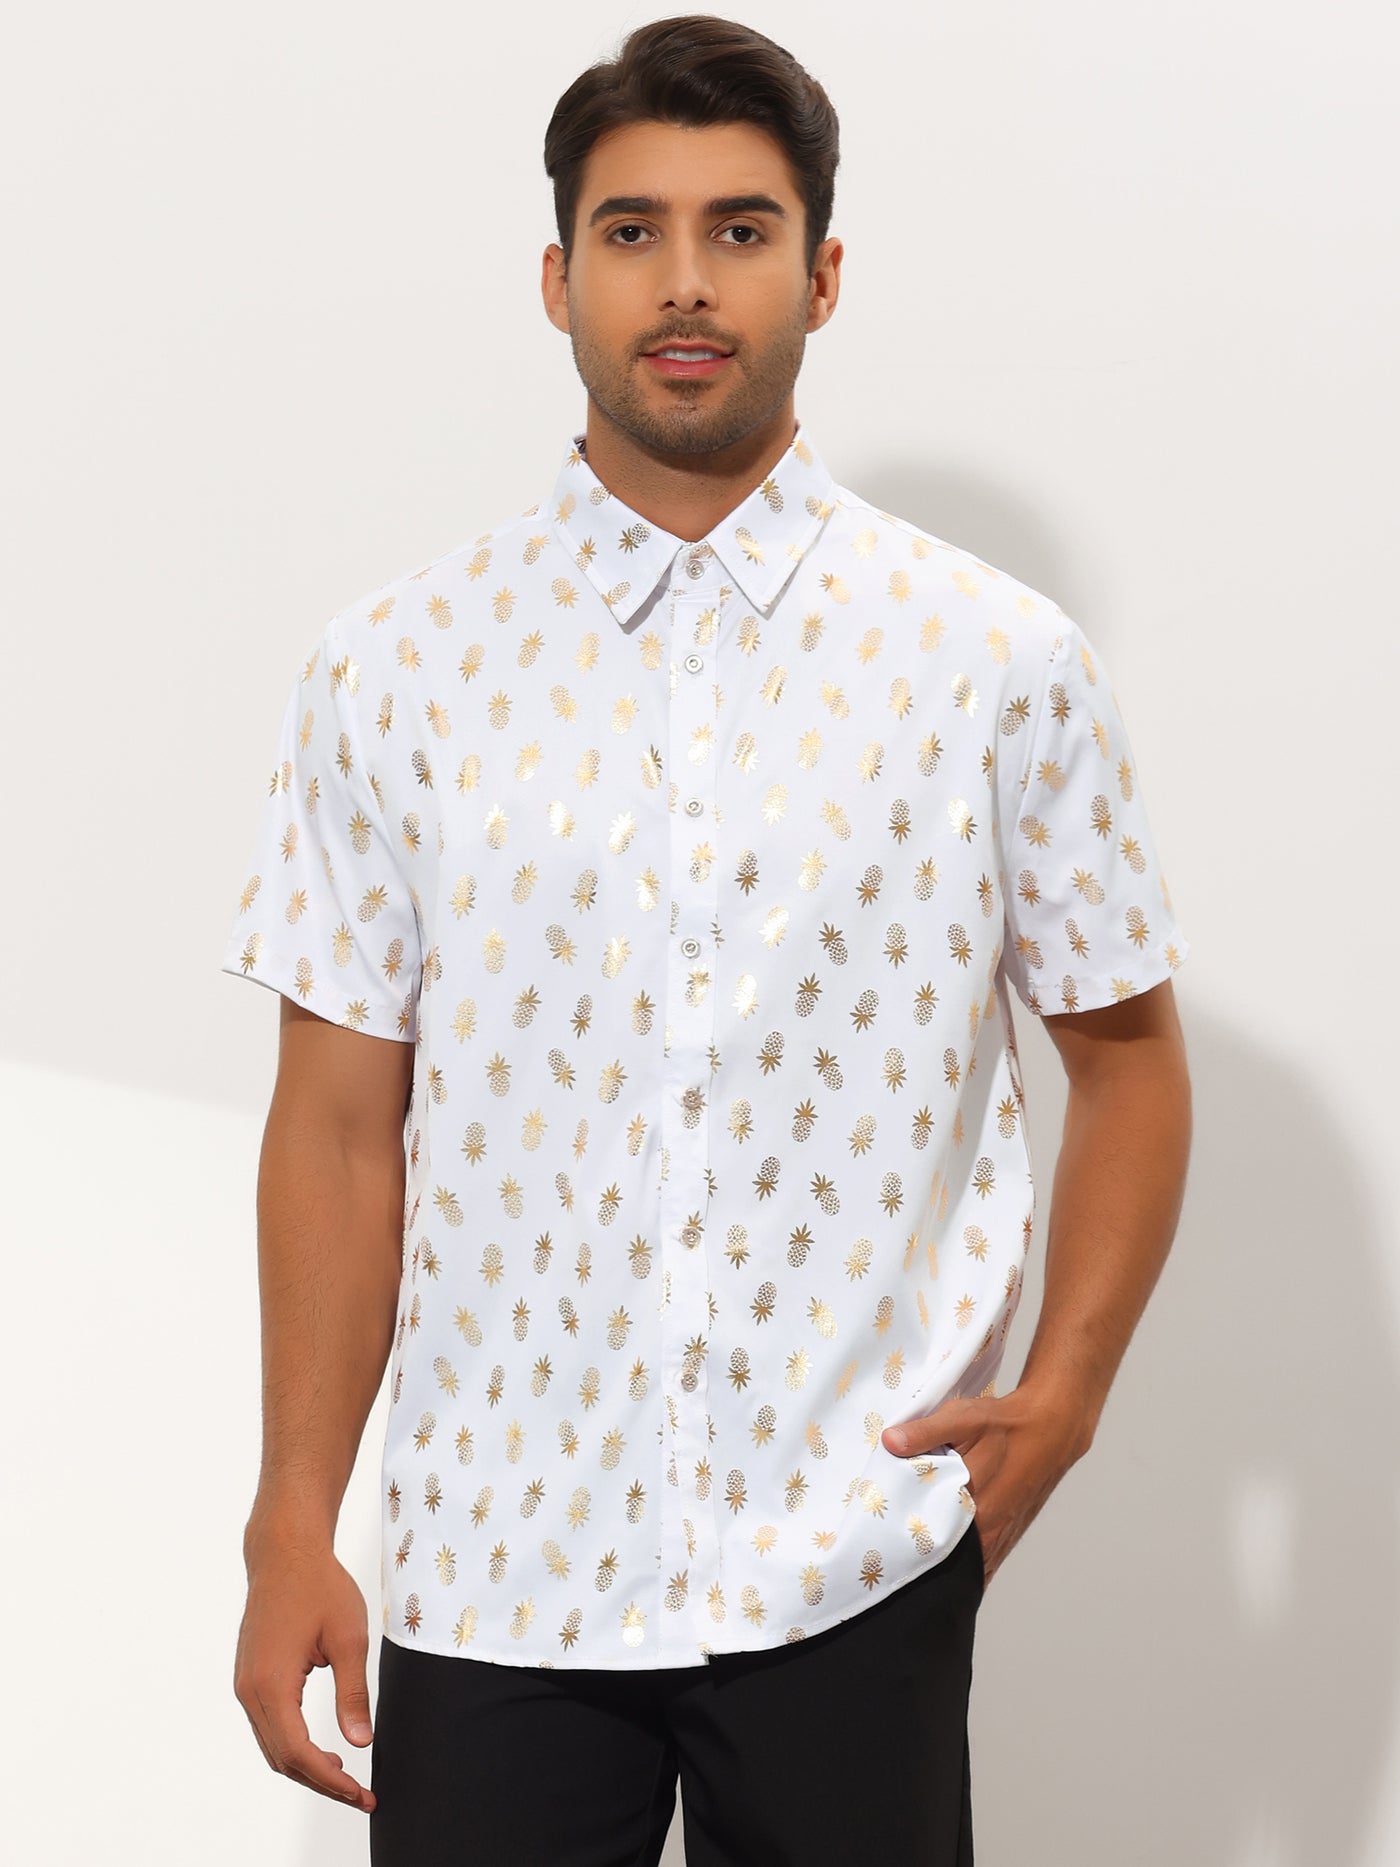 Bublédon Pineapple Shiny Printed Short Sleeve Dress Shirts